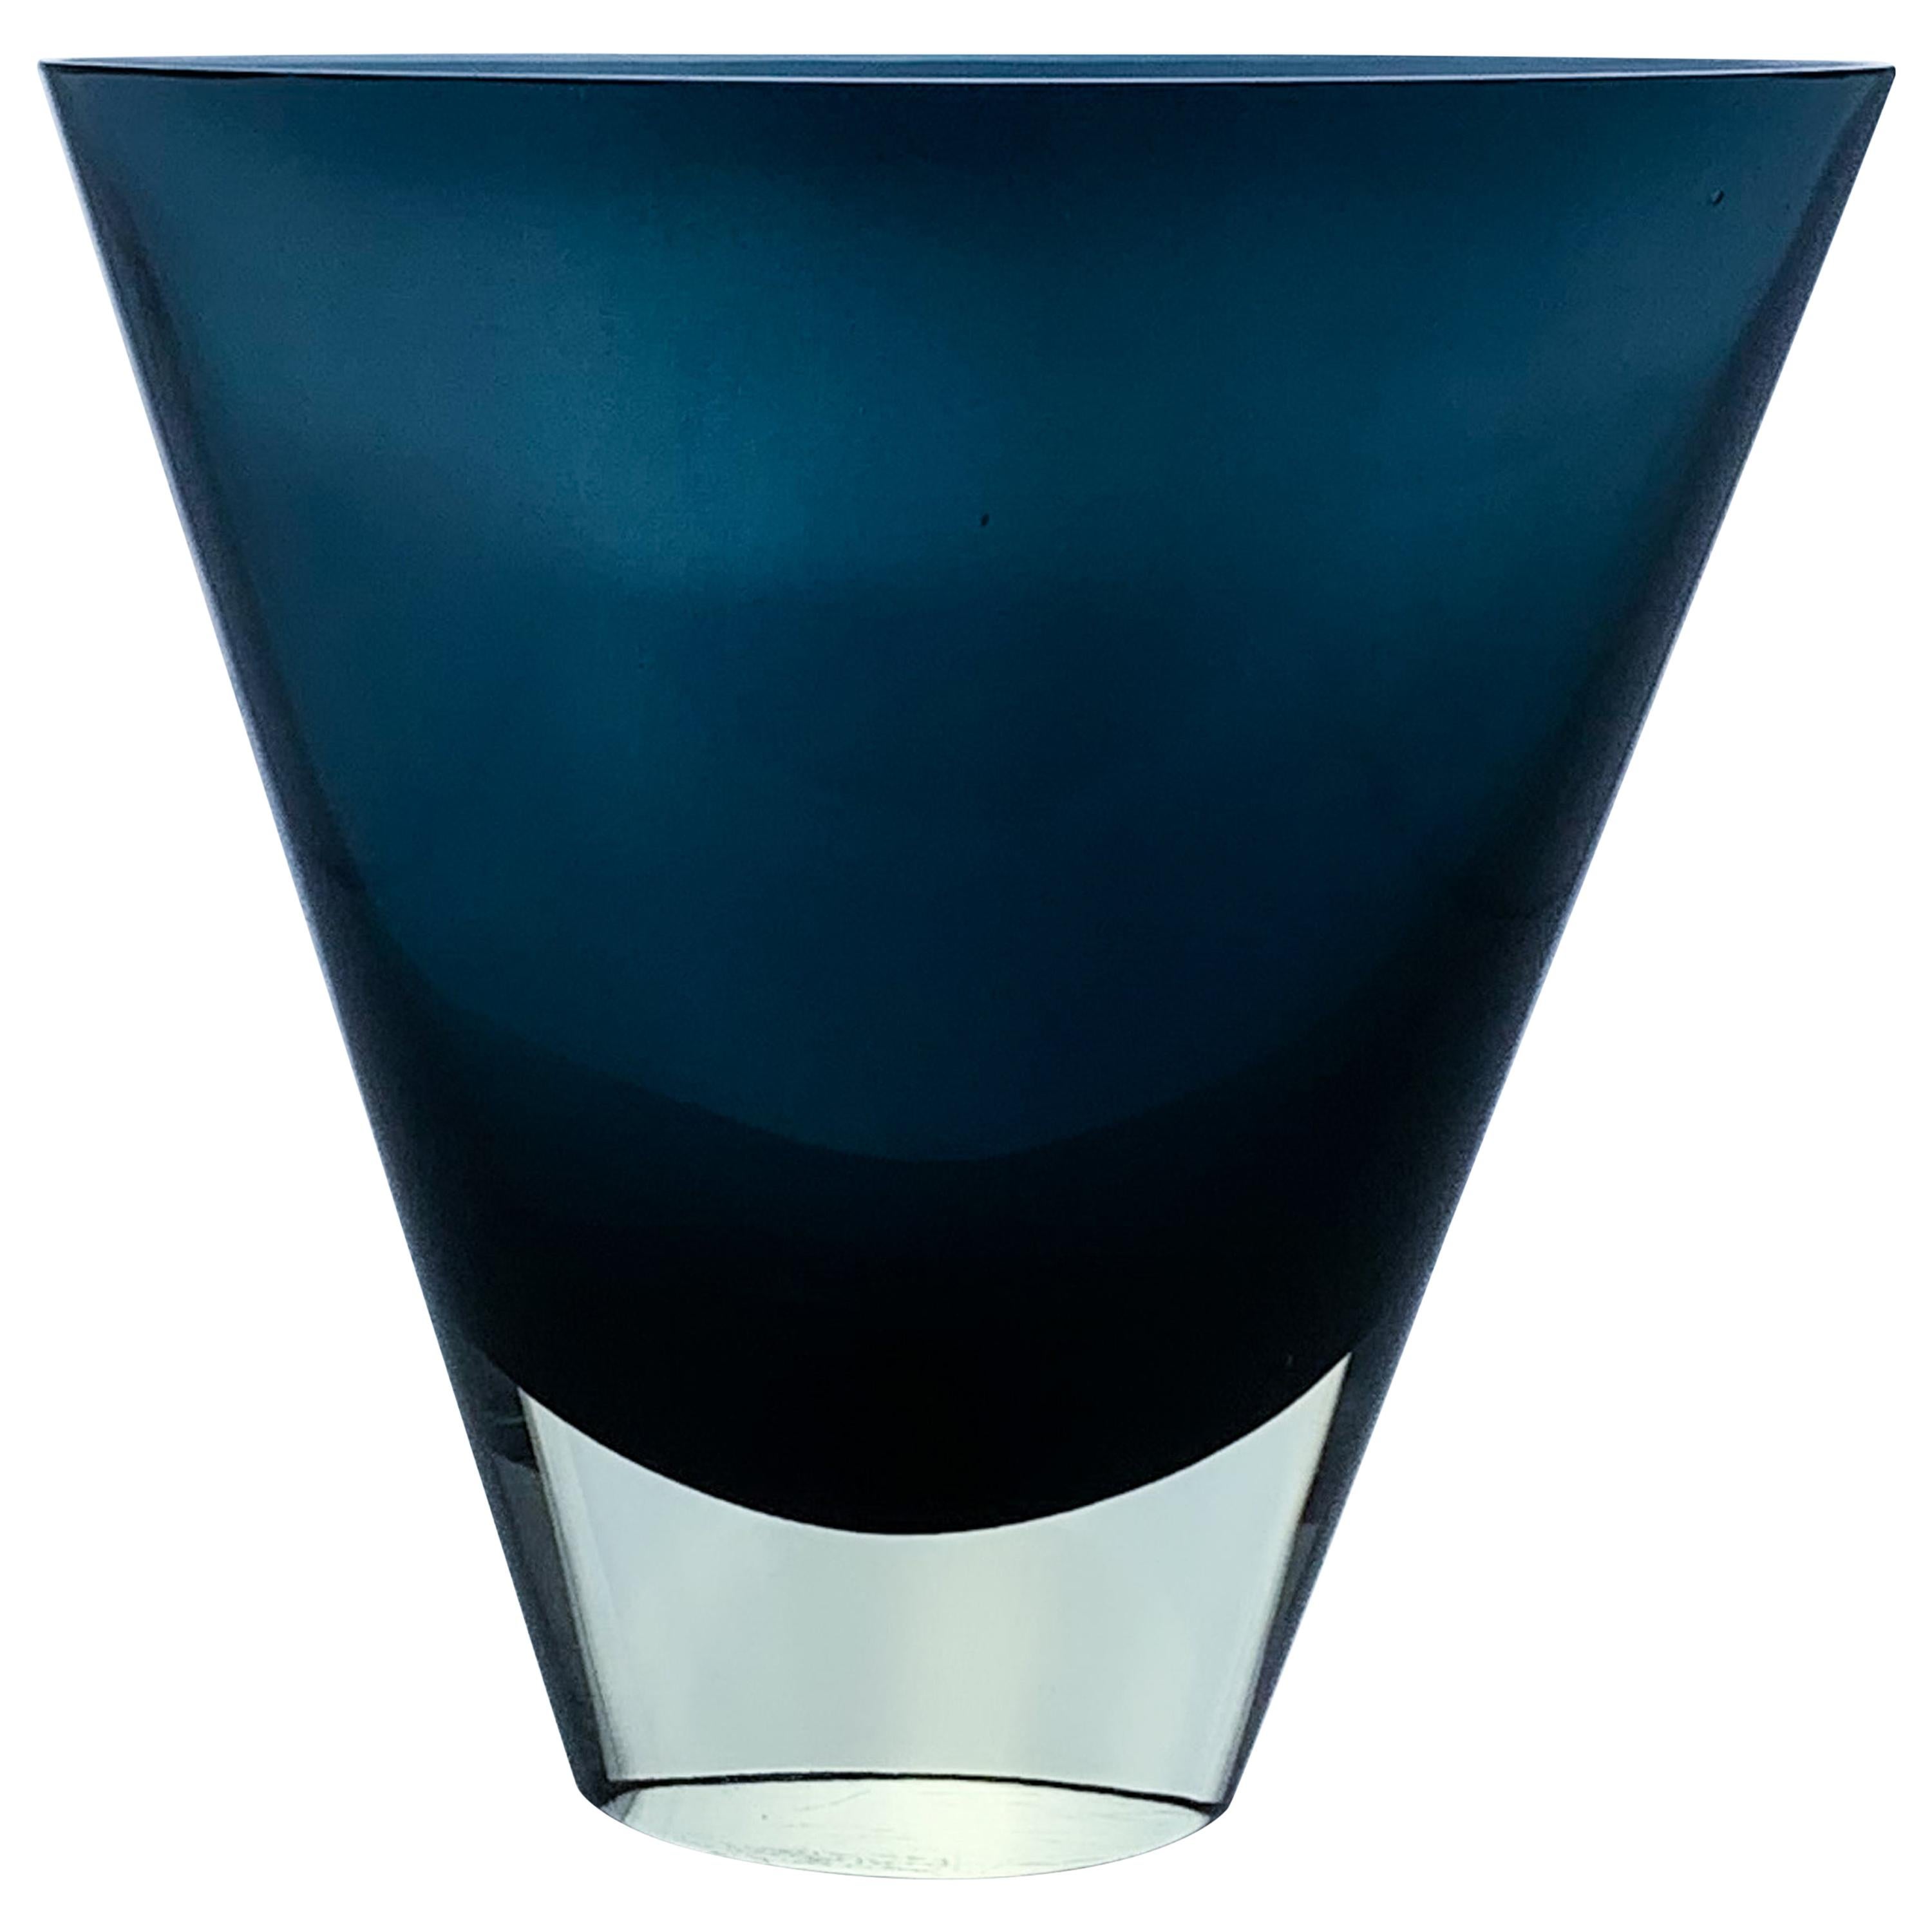 Kaj Franck, Cased Blue Glass Art-Object, Model KF 234, Nuutajärvi-Notsjö, 1961